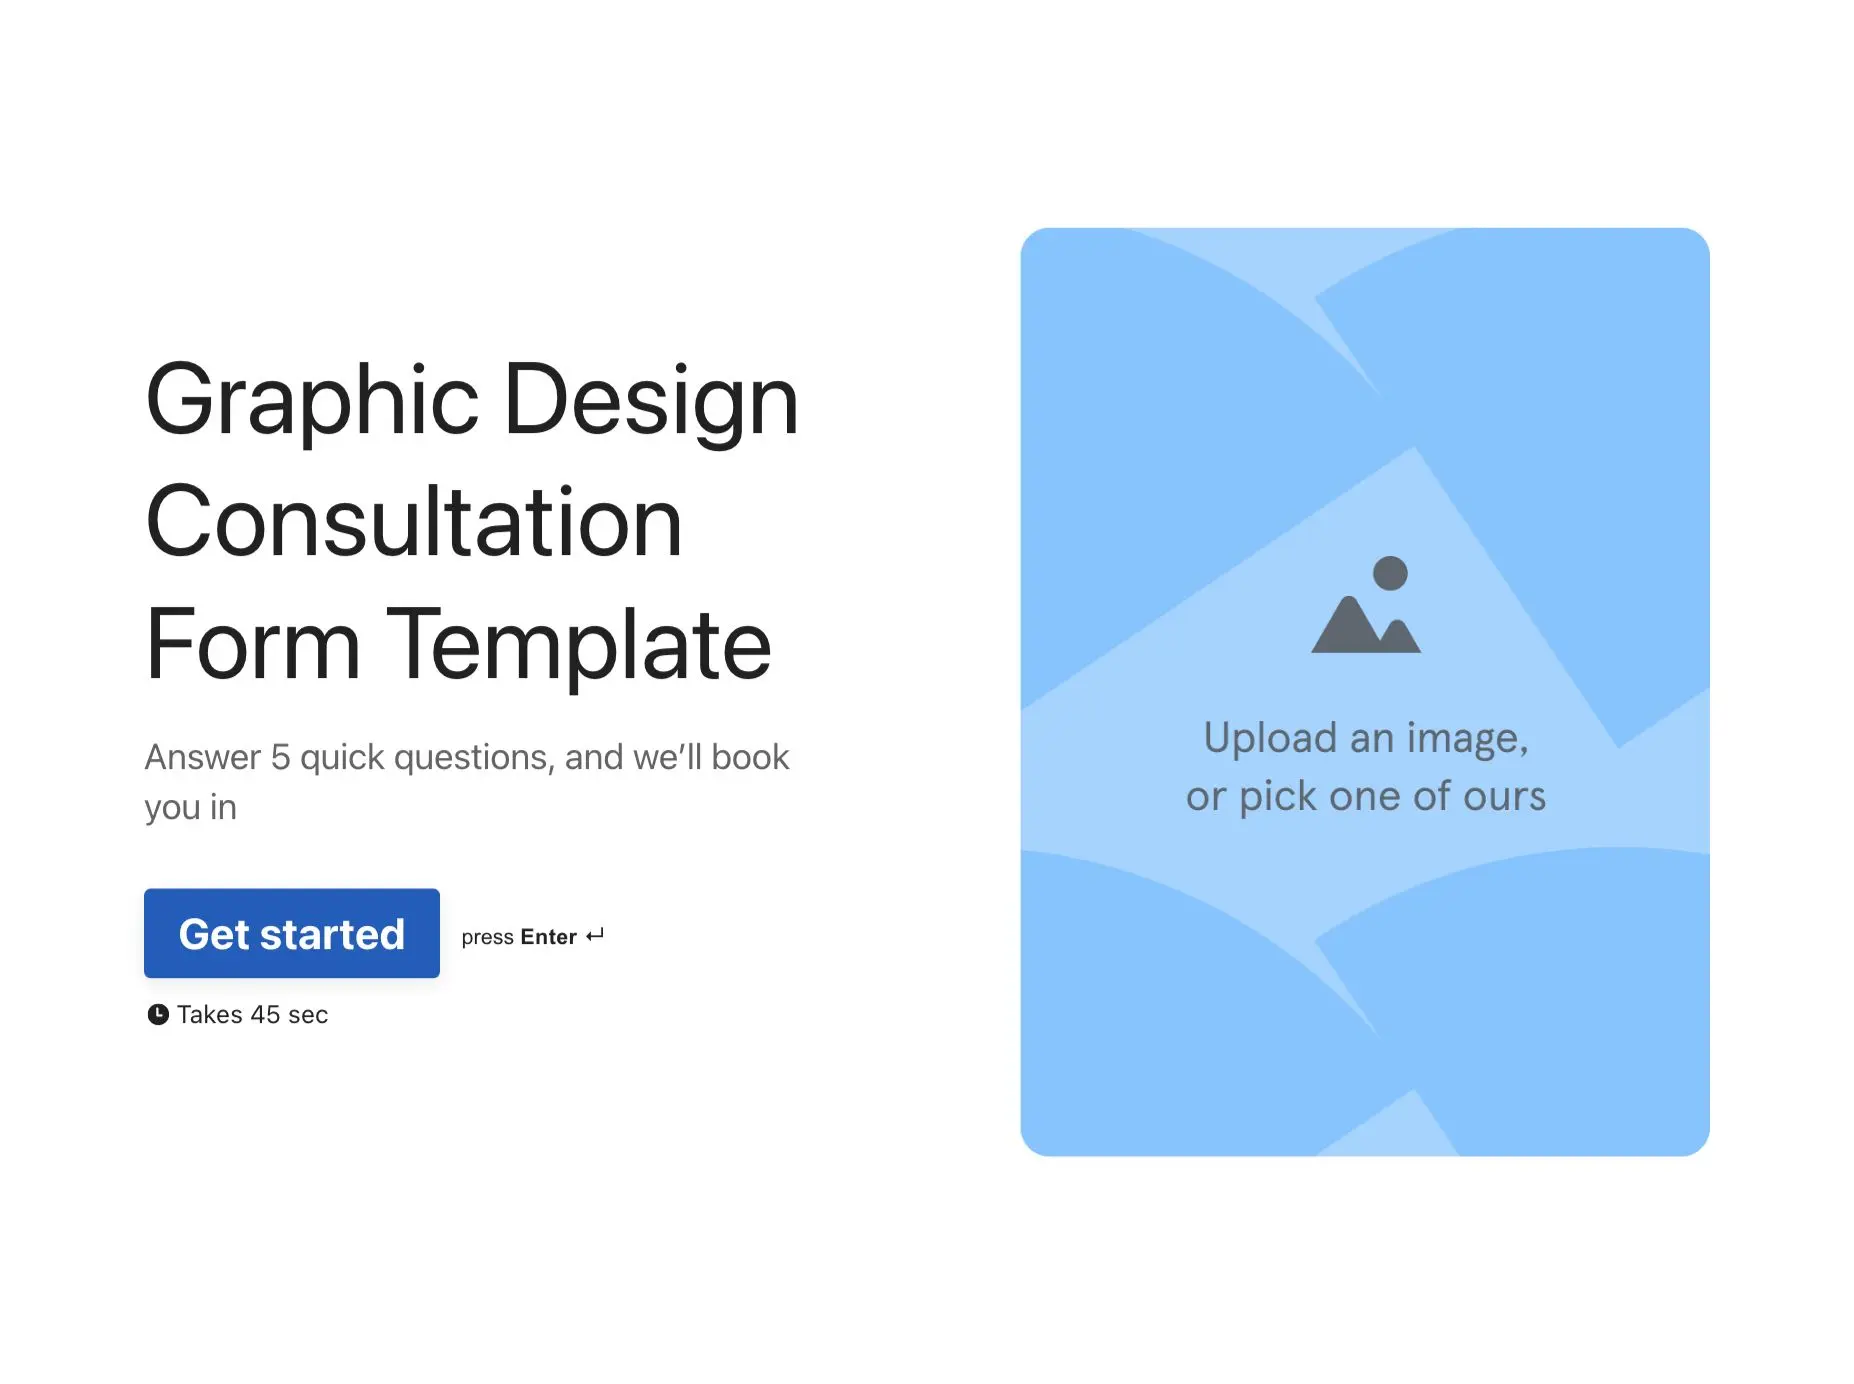 Graphic Design Consultation Form Template Hero